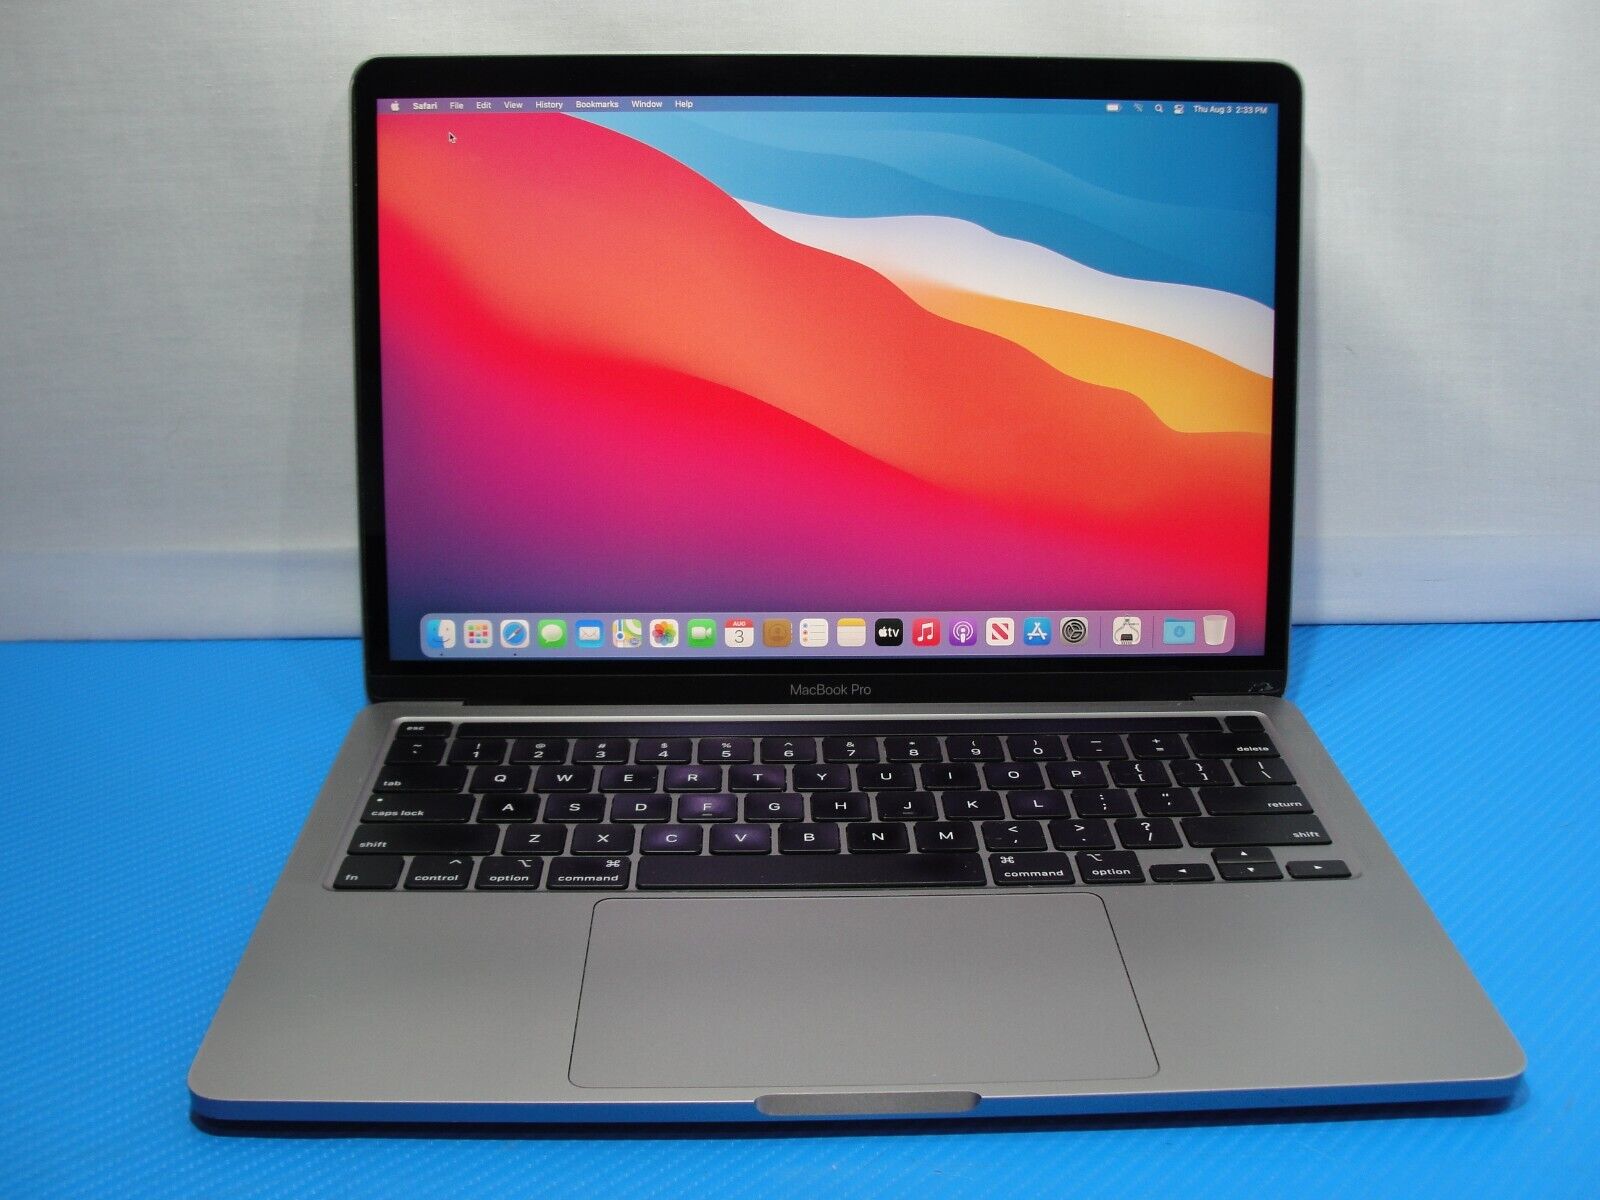 Apple MacBook Pro 13" 2020 i7-1068NG7 RAM 512GB SSD A2251